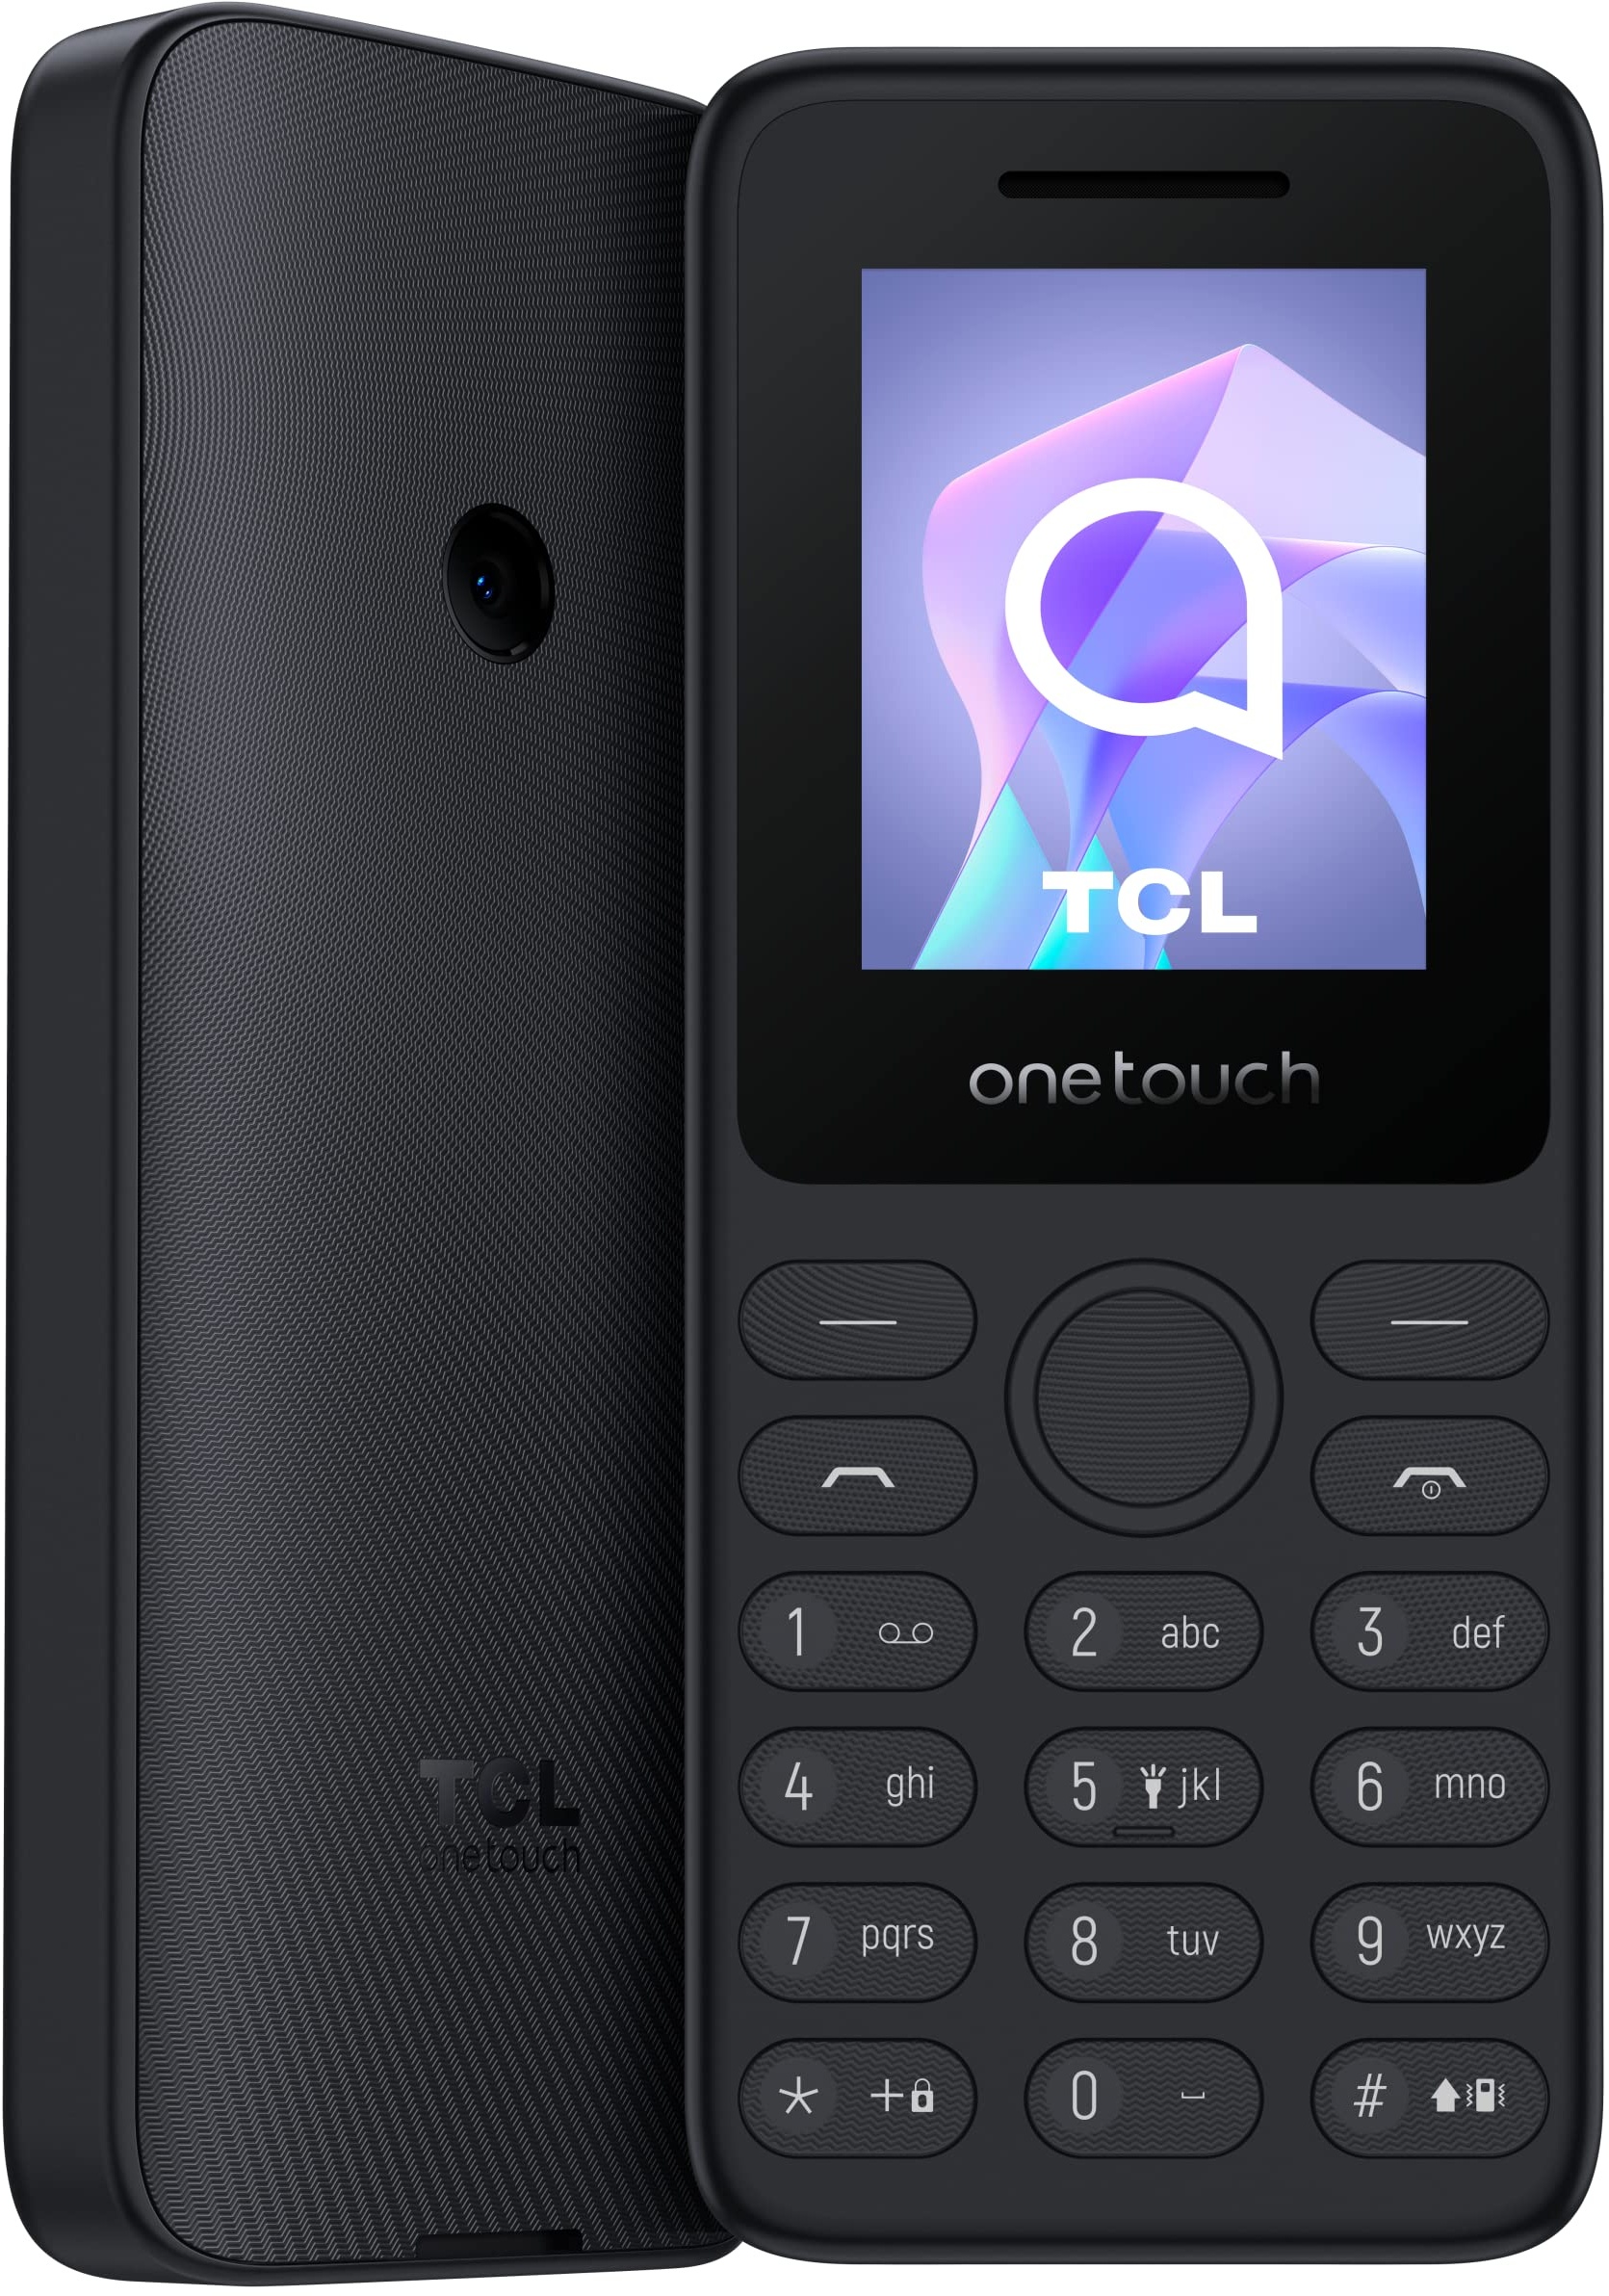 TCL Onetouch 4021 - User-friendly mobile phone, 4.6 cm (1.8 inch) 2G display, rear camera, 4 MB RAM, 4 MB ROM, 1030 mAh battery, Bluetooth, dual SIM, 3.5 mm audio port, torch Radio (grey)